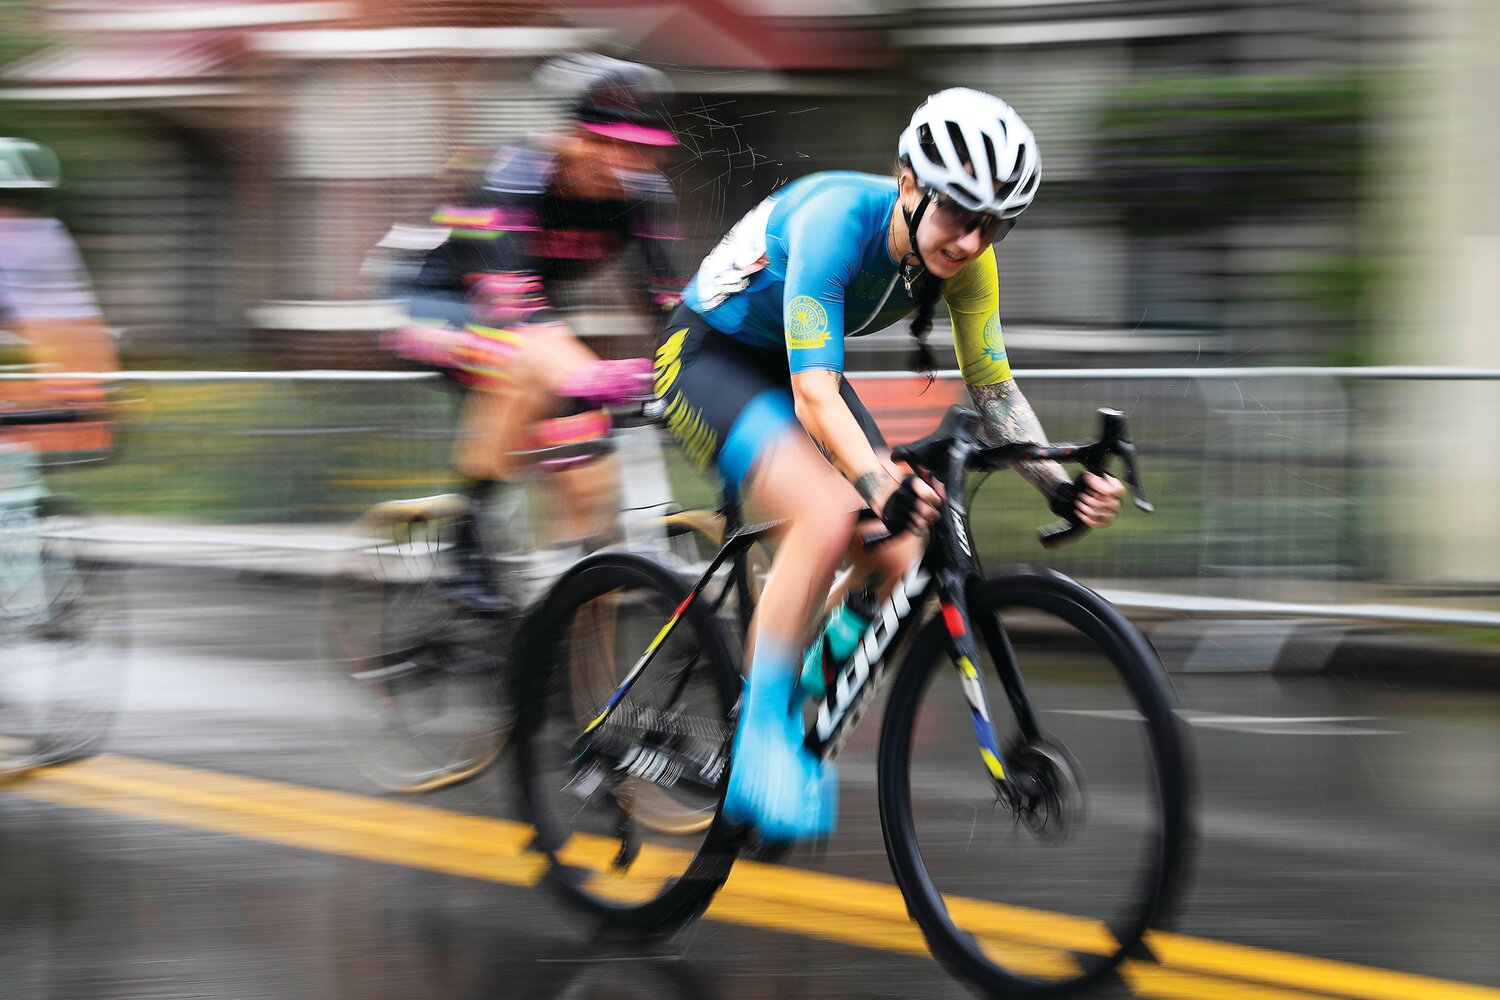 Category 3/4 women’s race winner Natalie Gulla speeds through the rain-soaked streets.